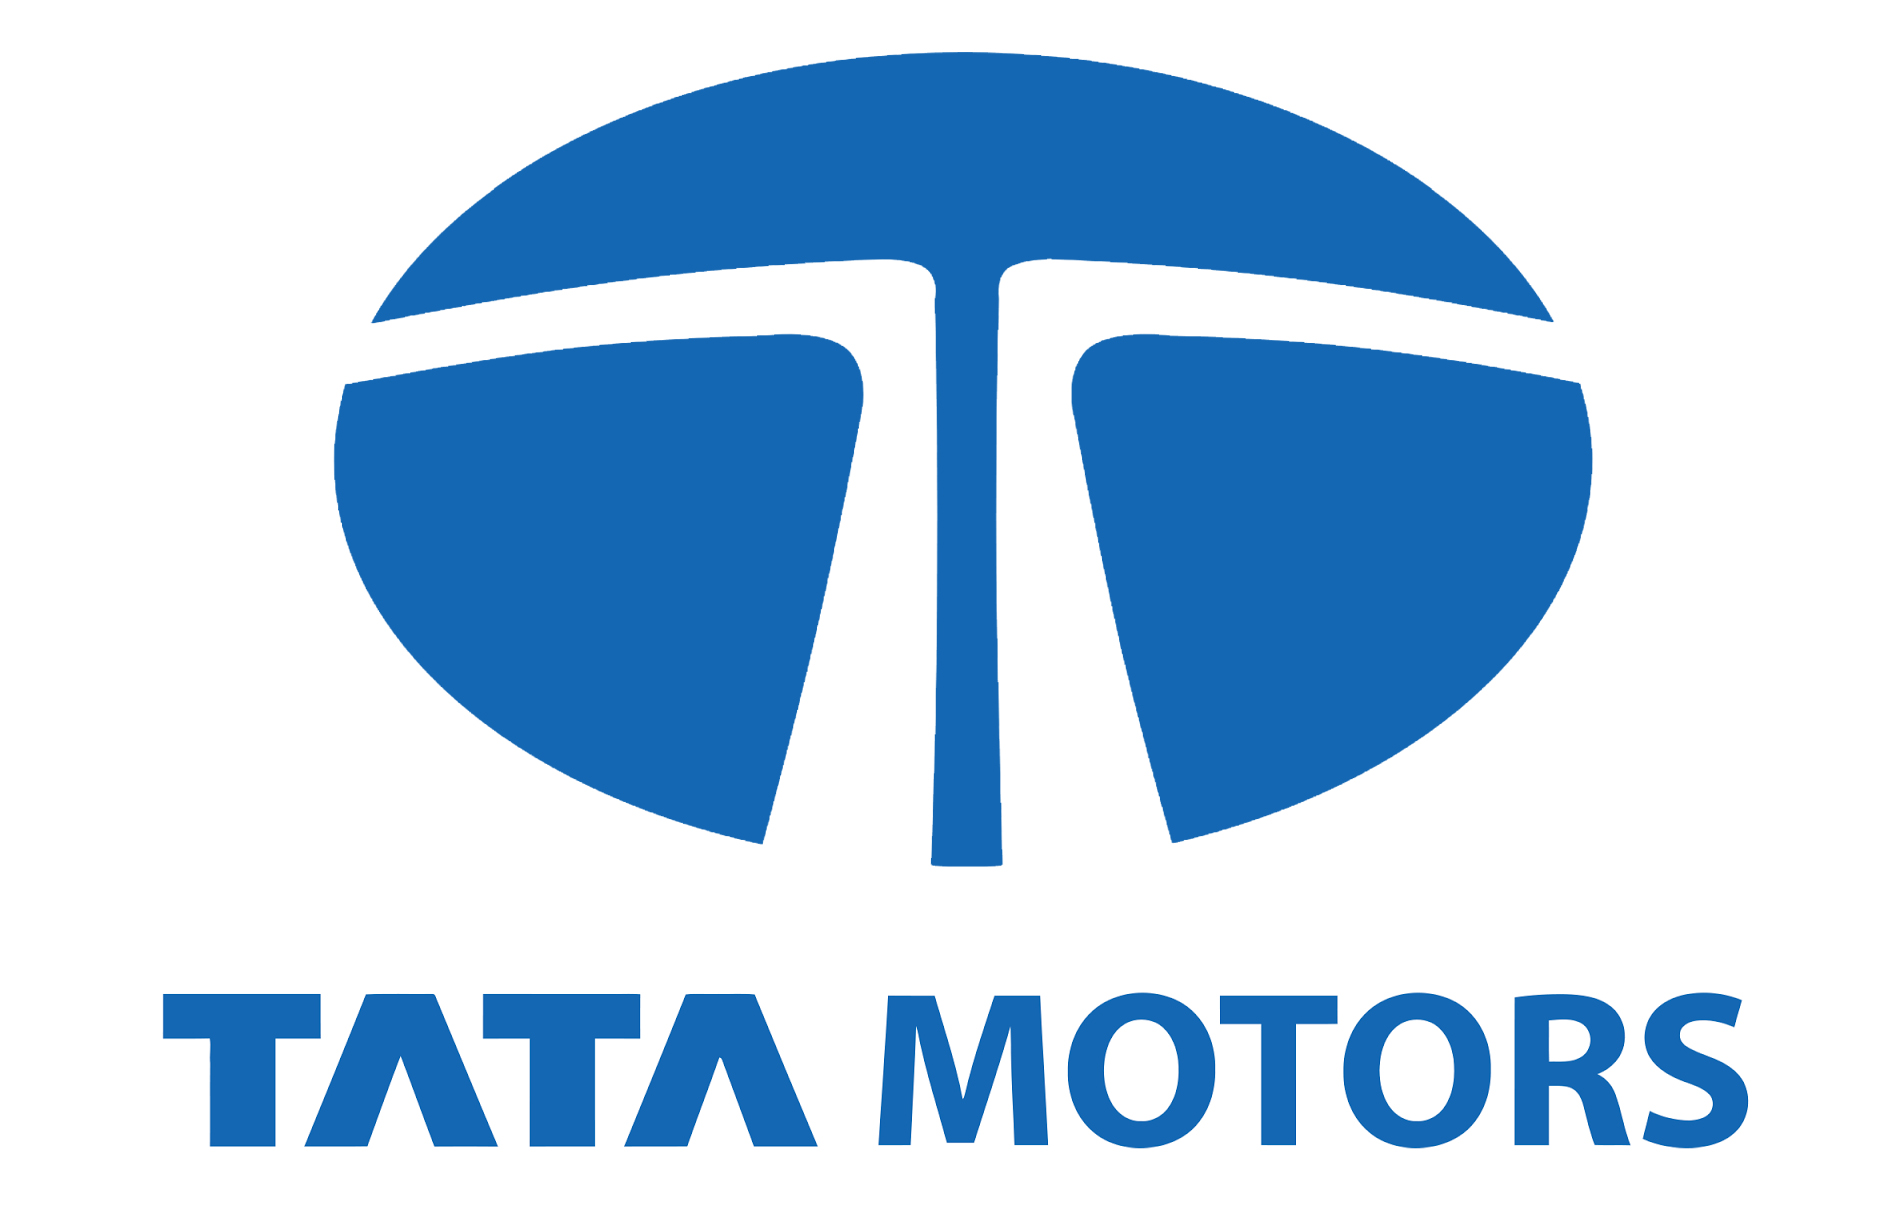 Tata Motors Cars Showroom - Mahadeva Vehicles Pvt Ltd|Service Center|Automotive